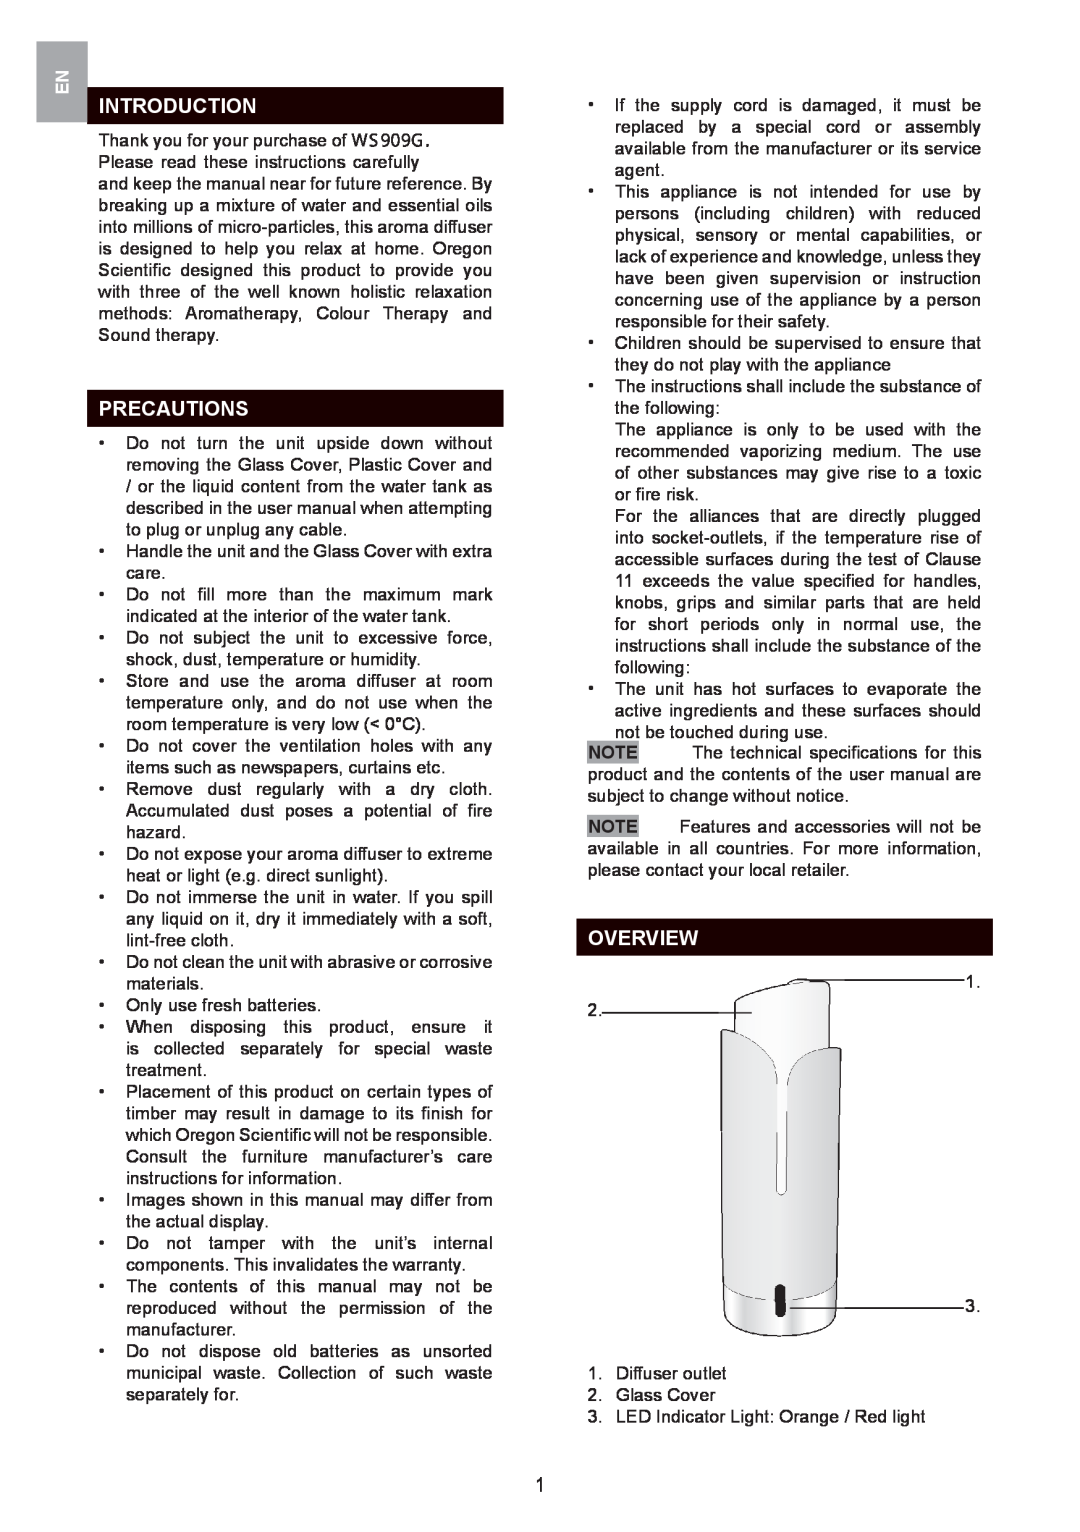 Oregon Scientific WS909 user manual Introduction, Precautions, Overview 